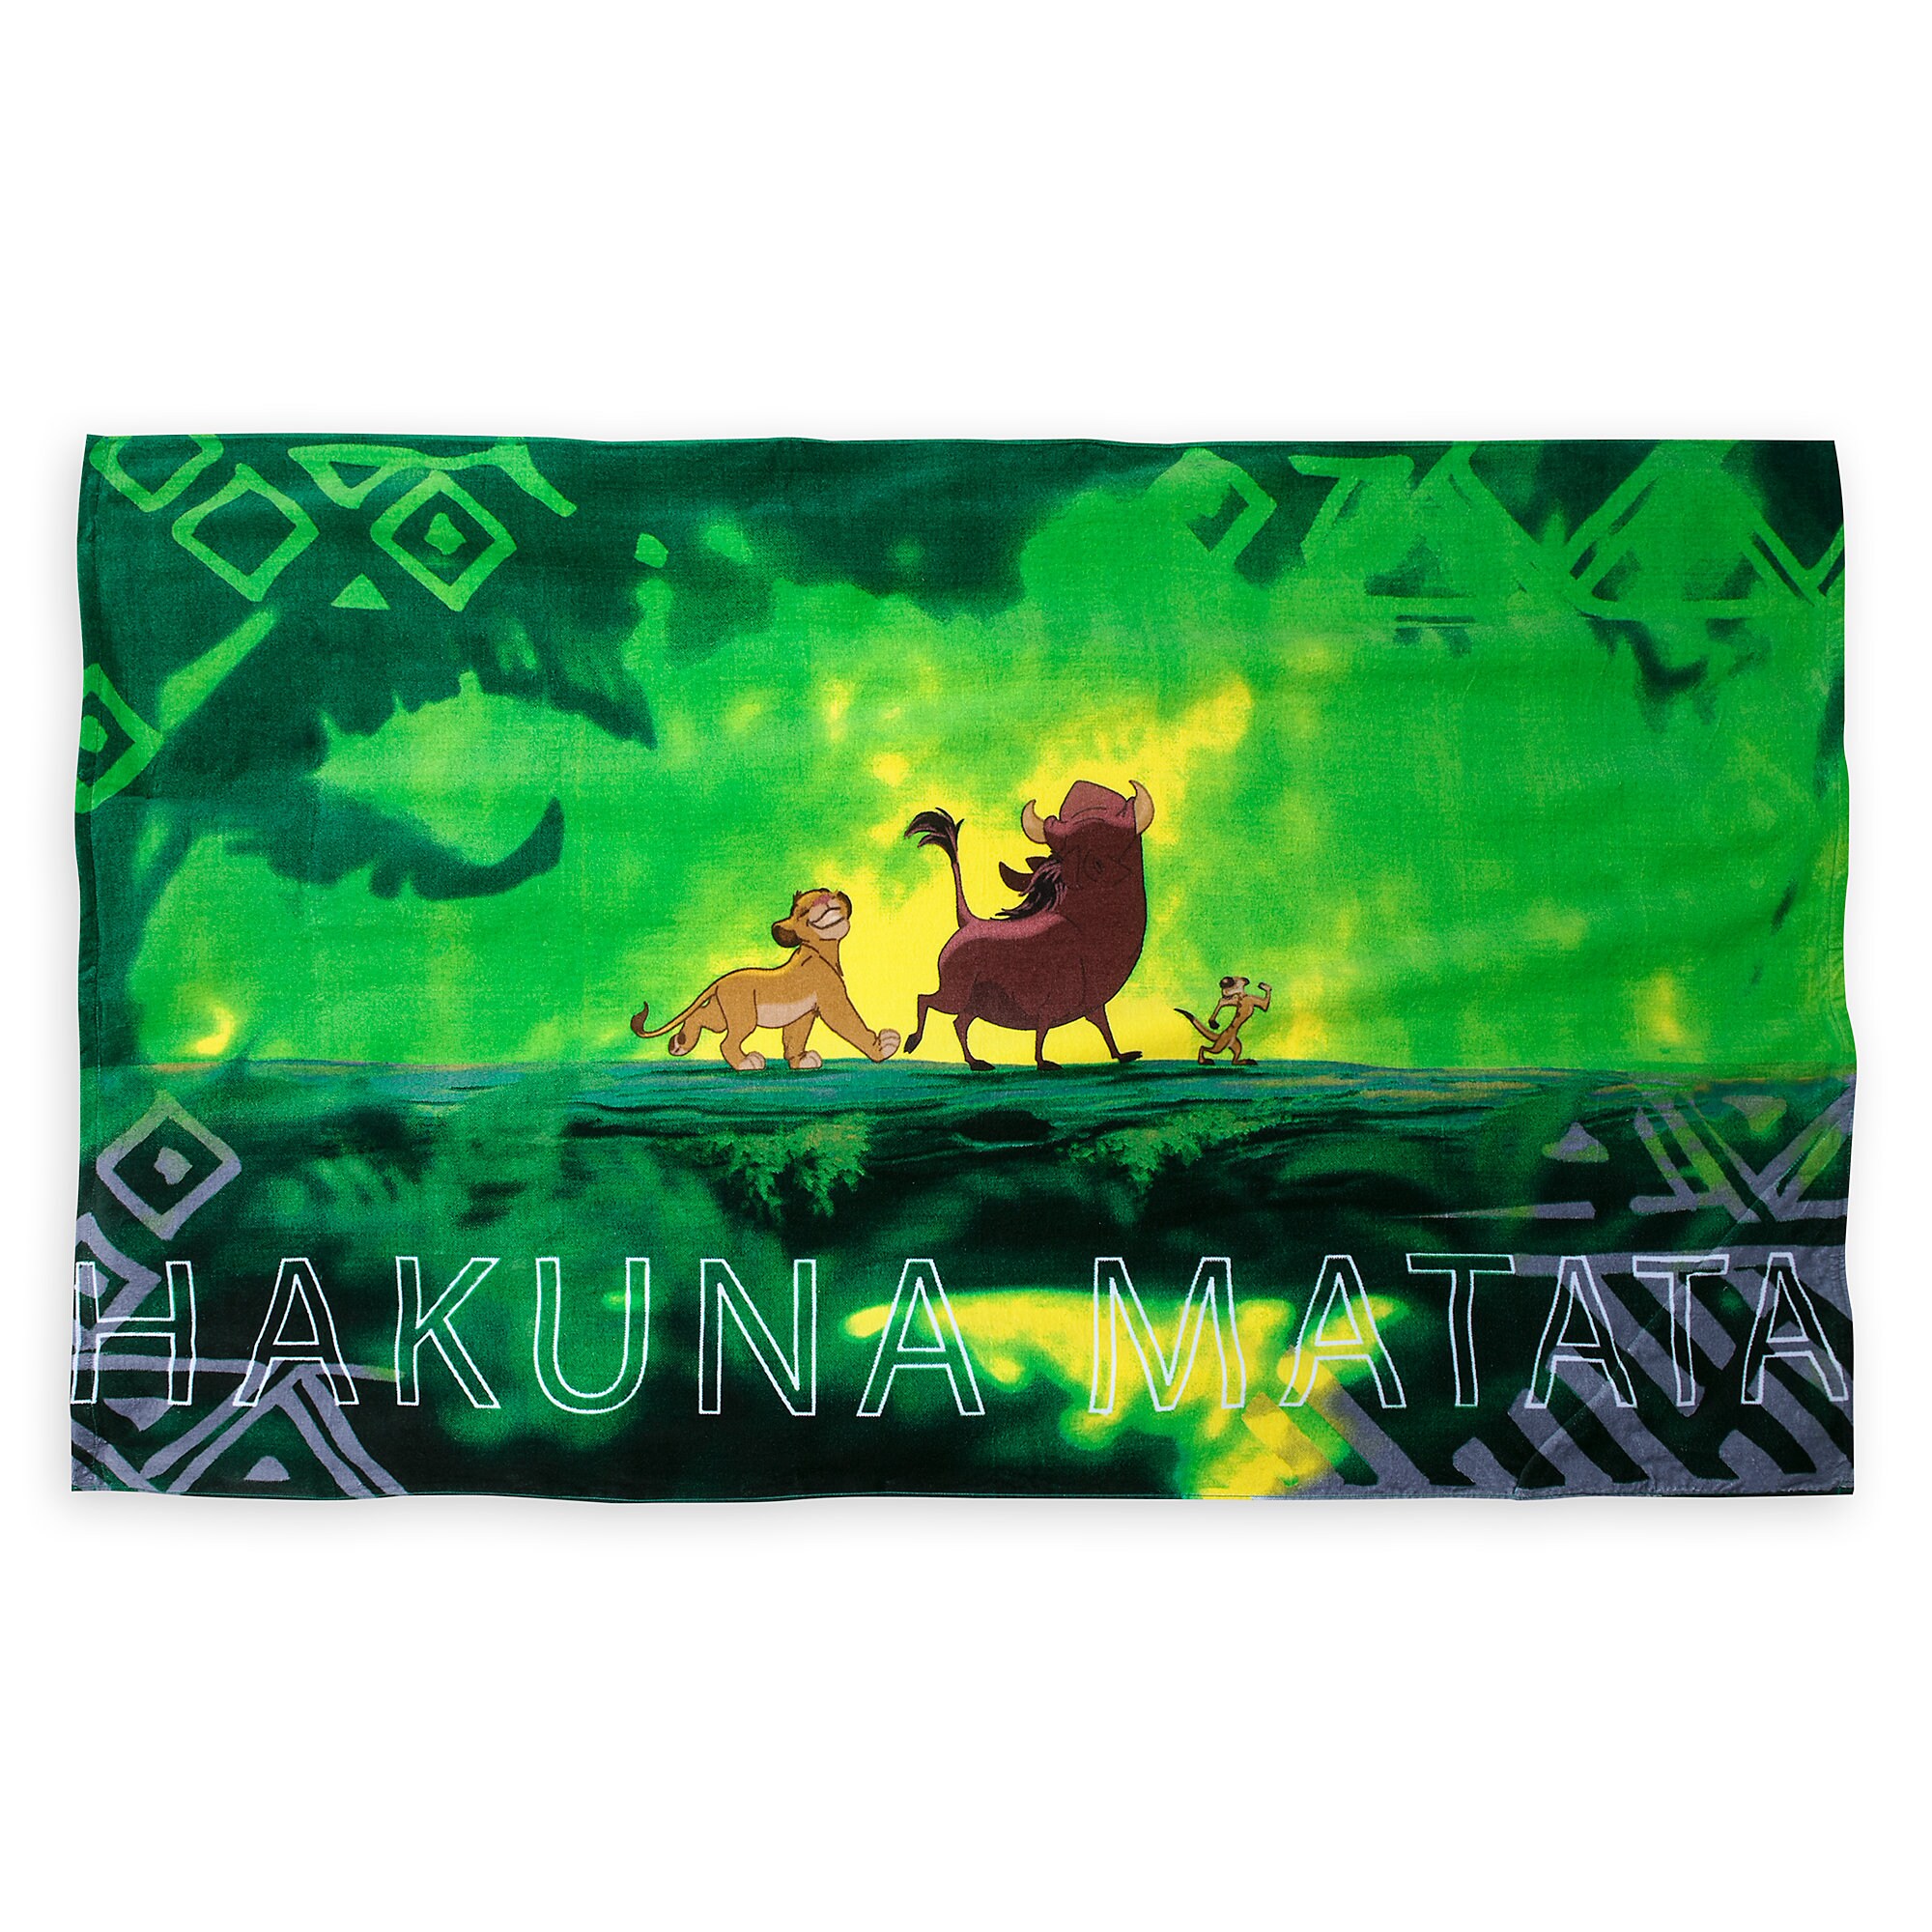 Hakuna Matata Beach Towel - The Lion King - Oh My Disney